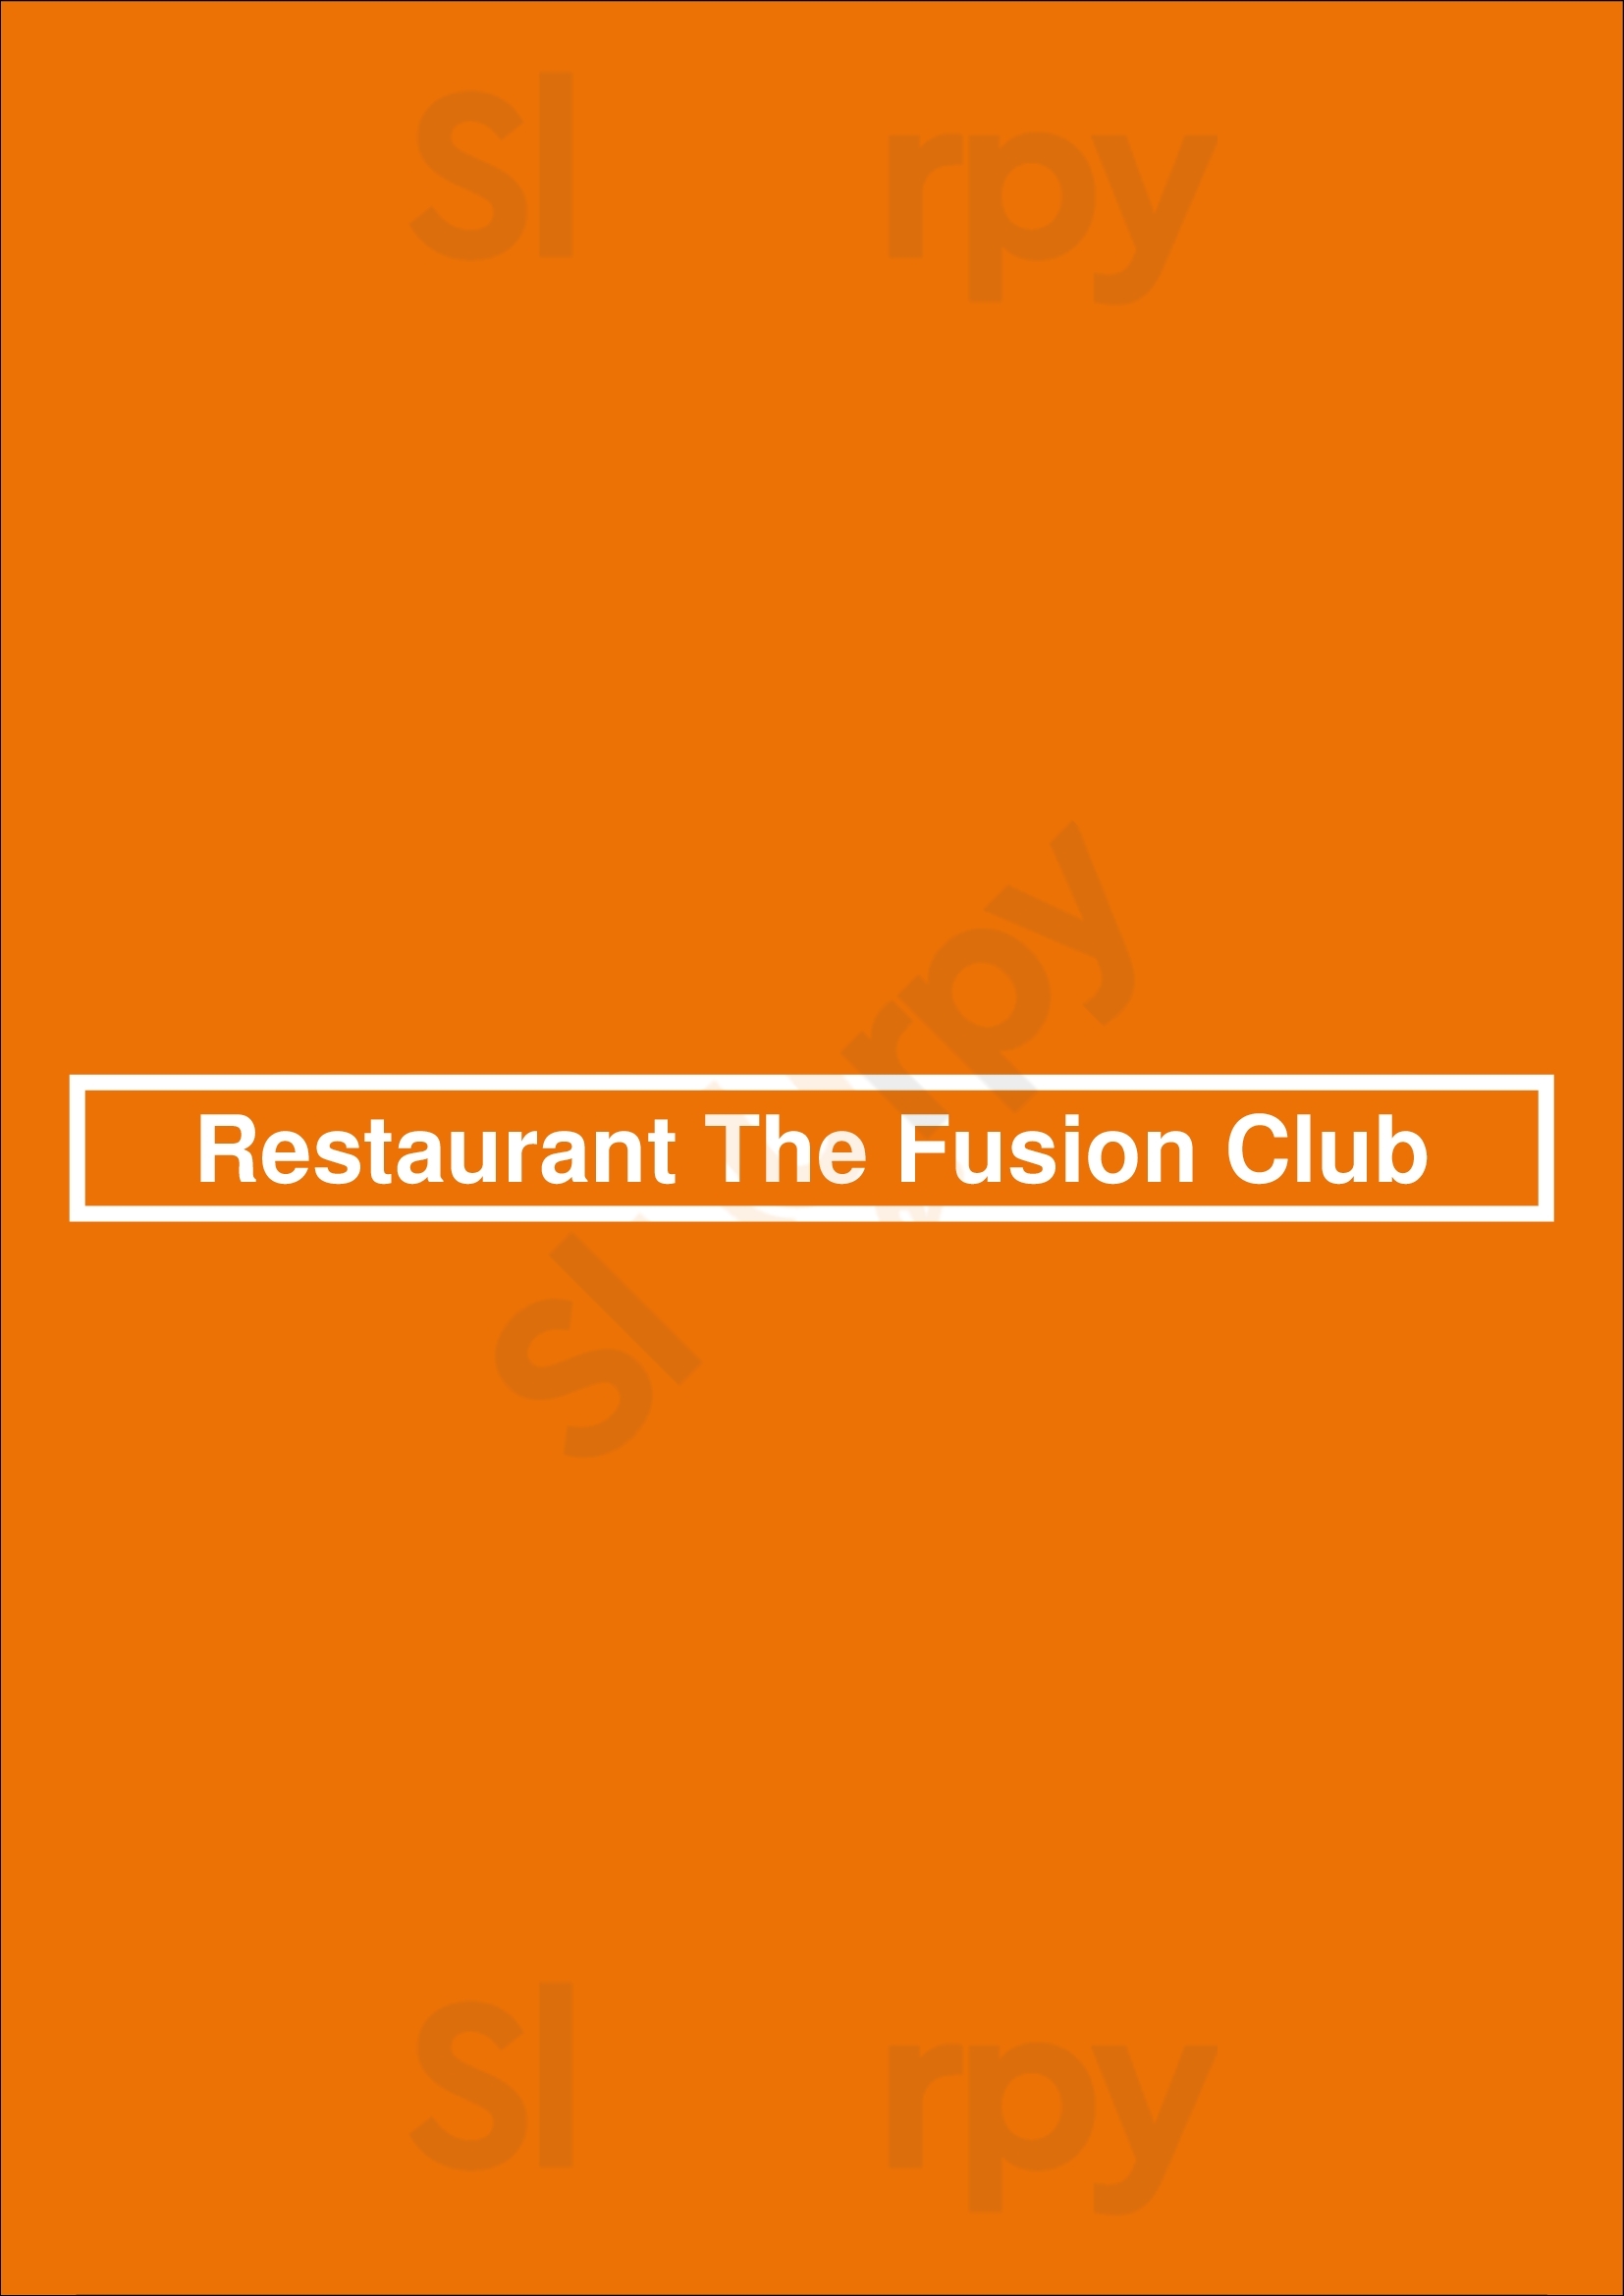 Restaurant The Fusion Club Zeist Menu - 1